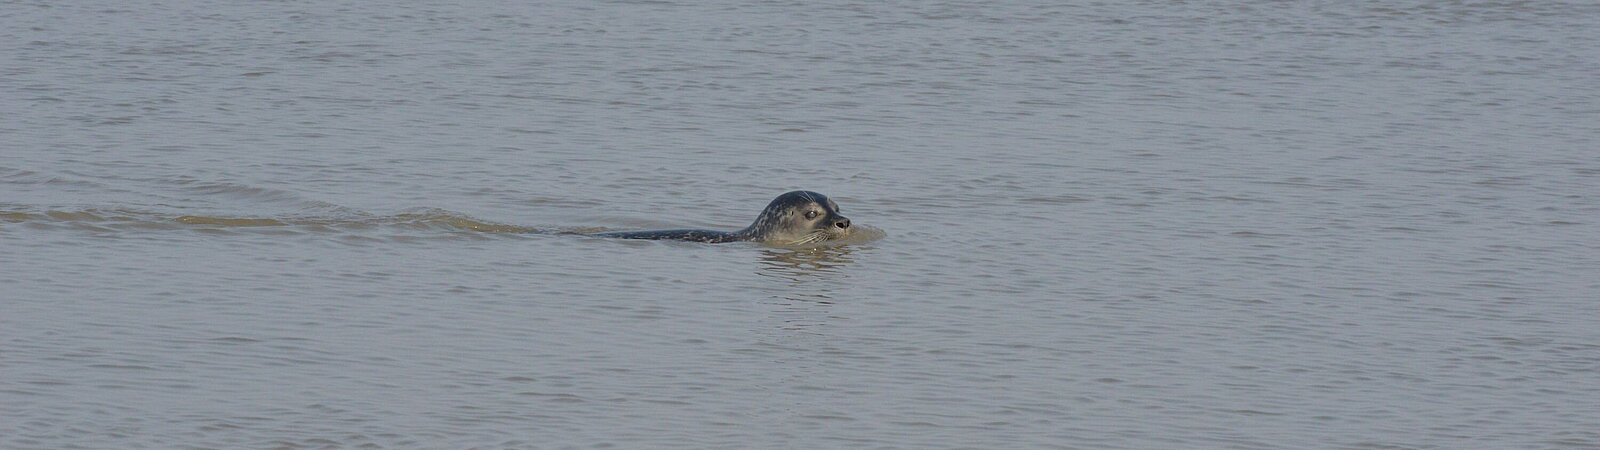 swimming harbour seal